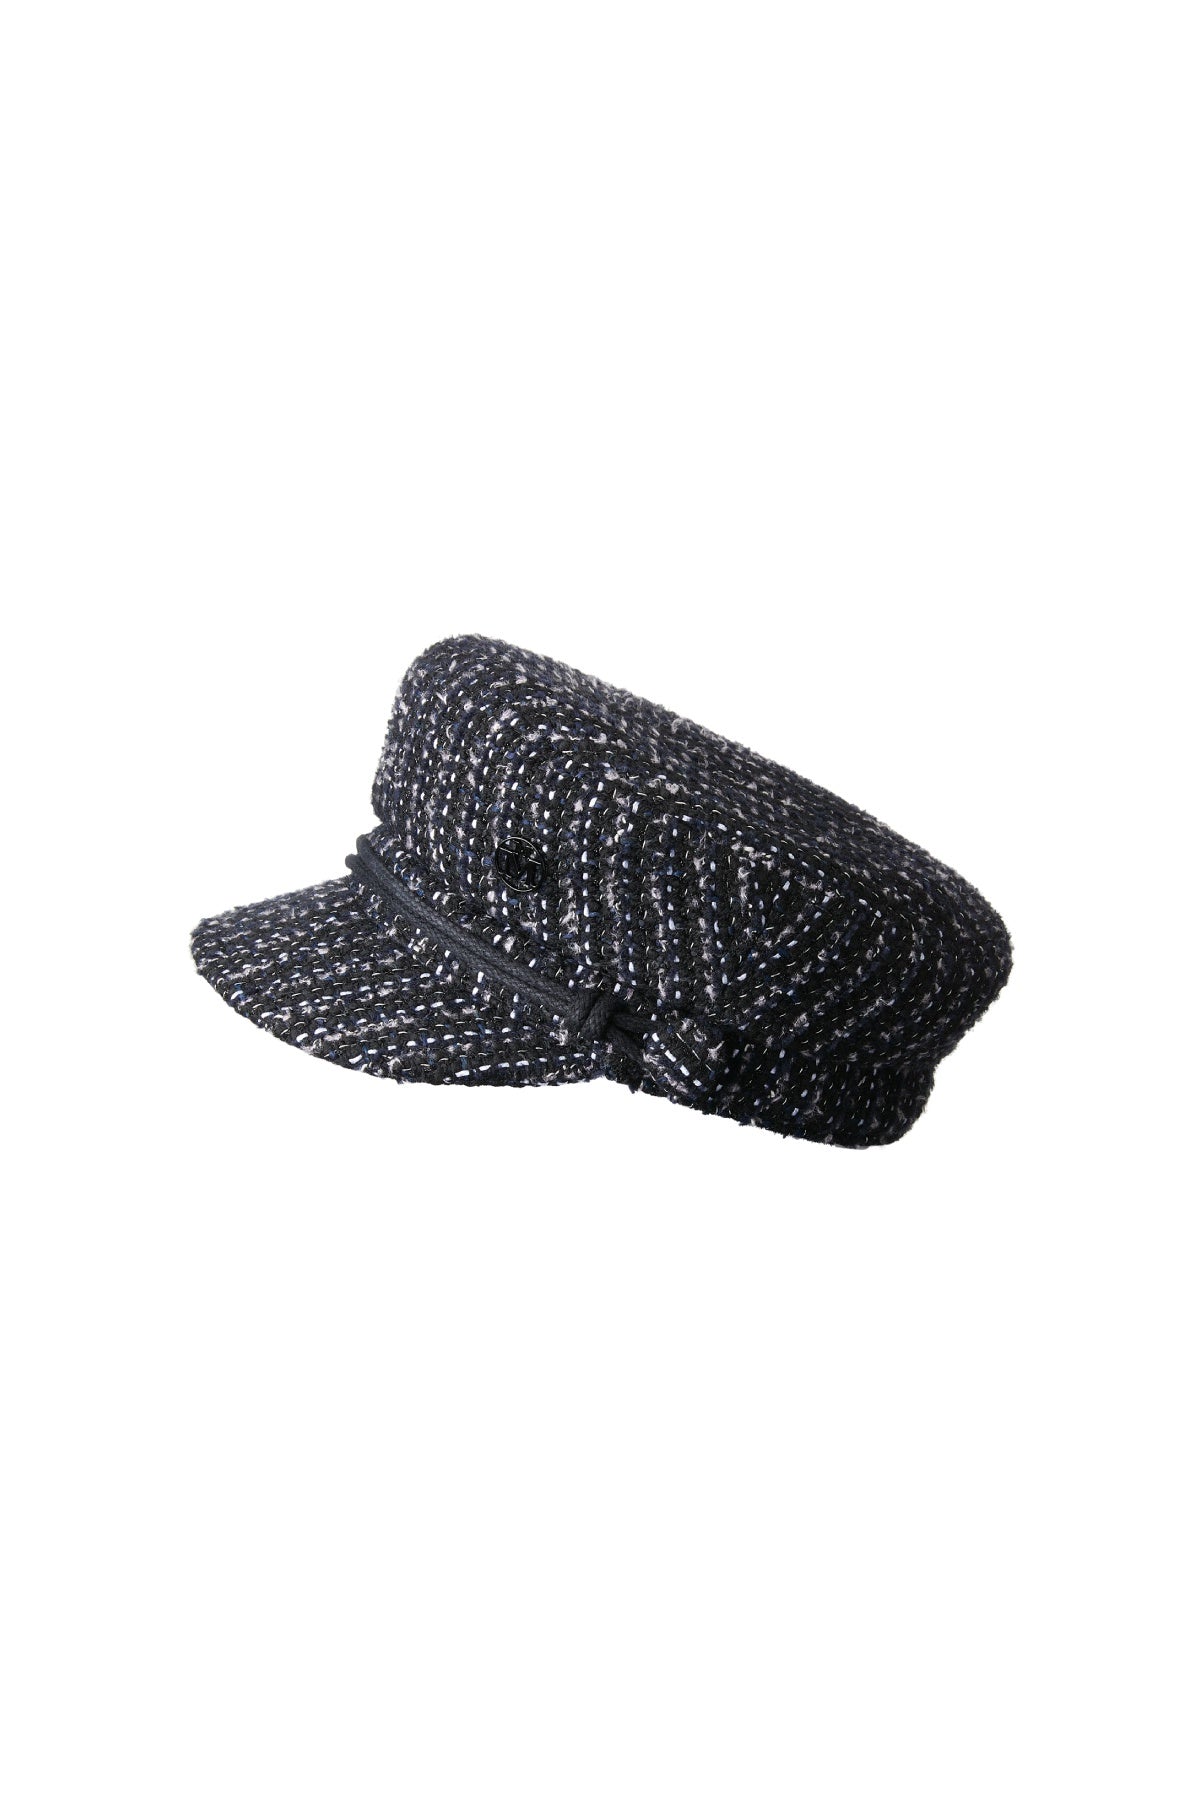 Maison Michel New Abby Striped Tweed Cap - Black